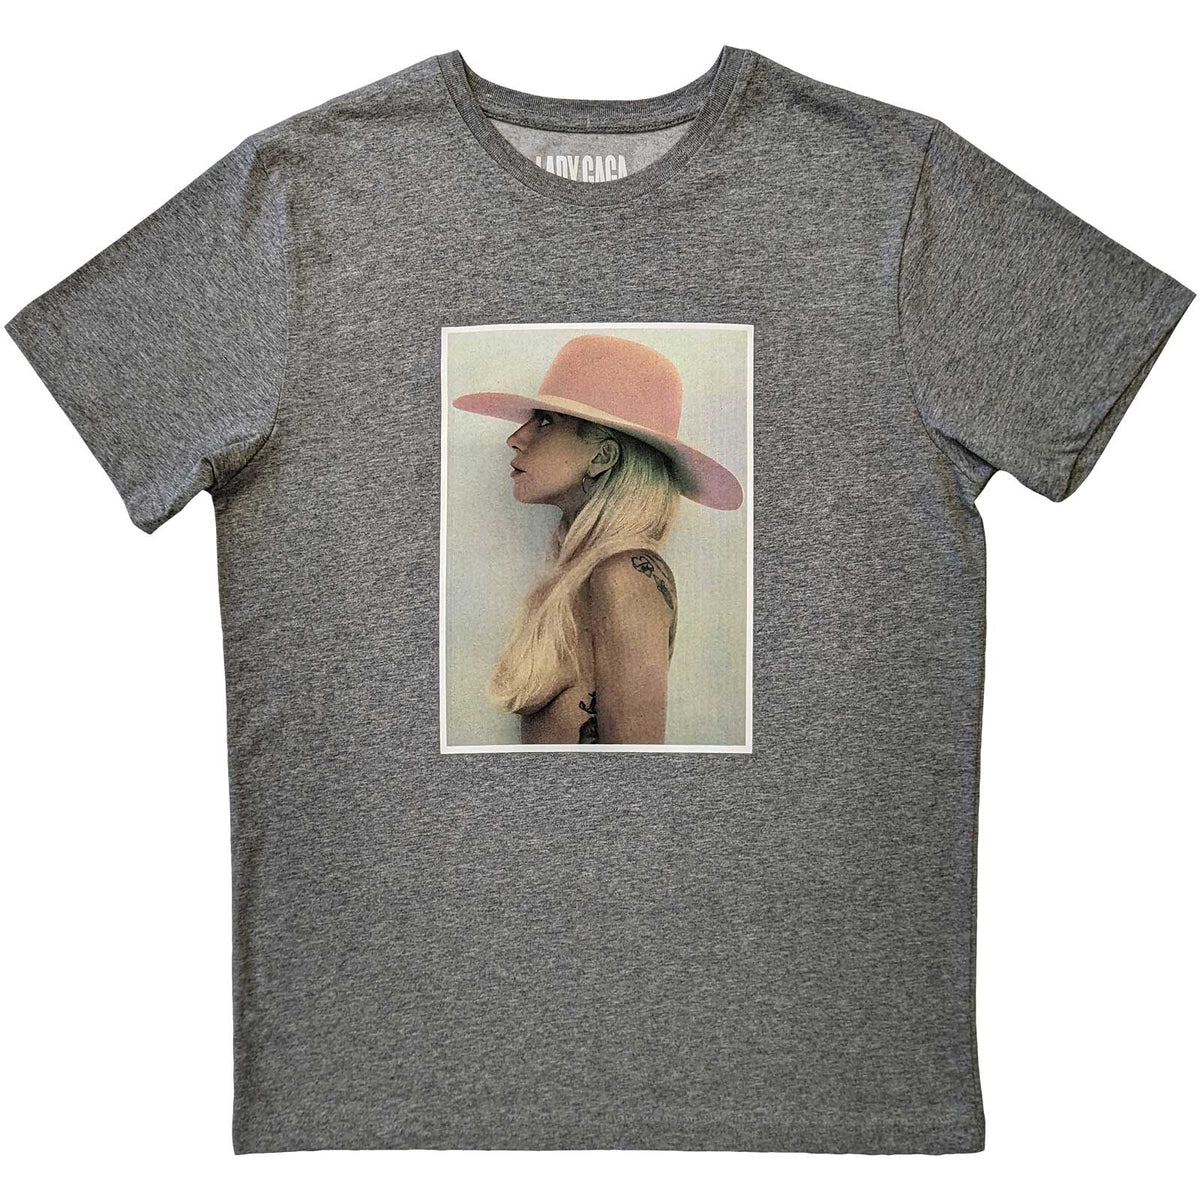 Lady Gaga T-Shirt - Pink Hat - Unisex Official Licensed Design